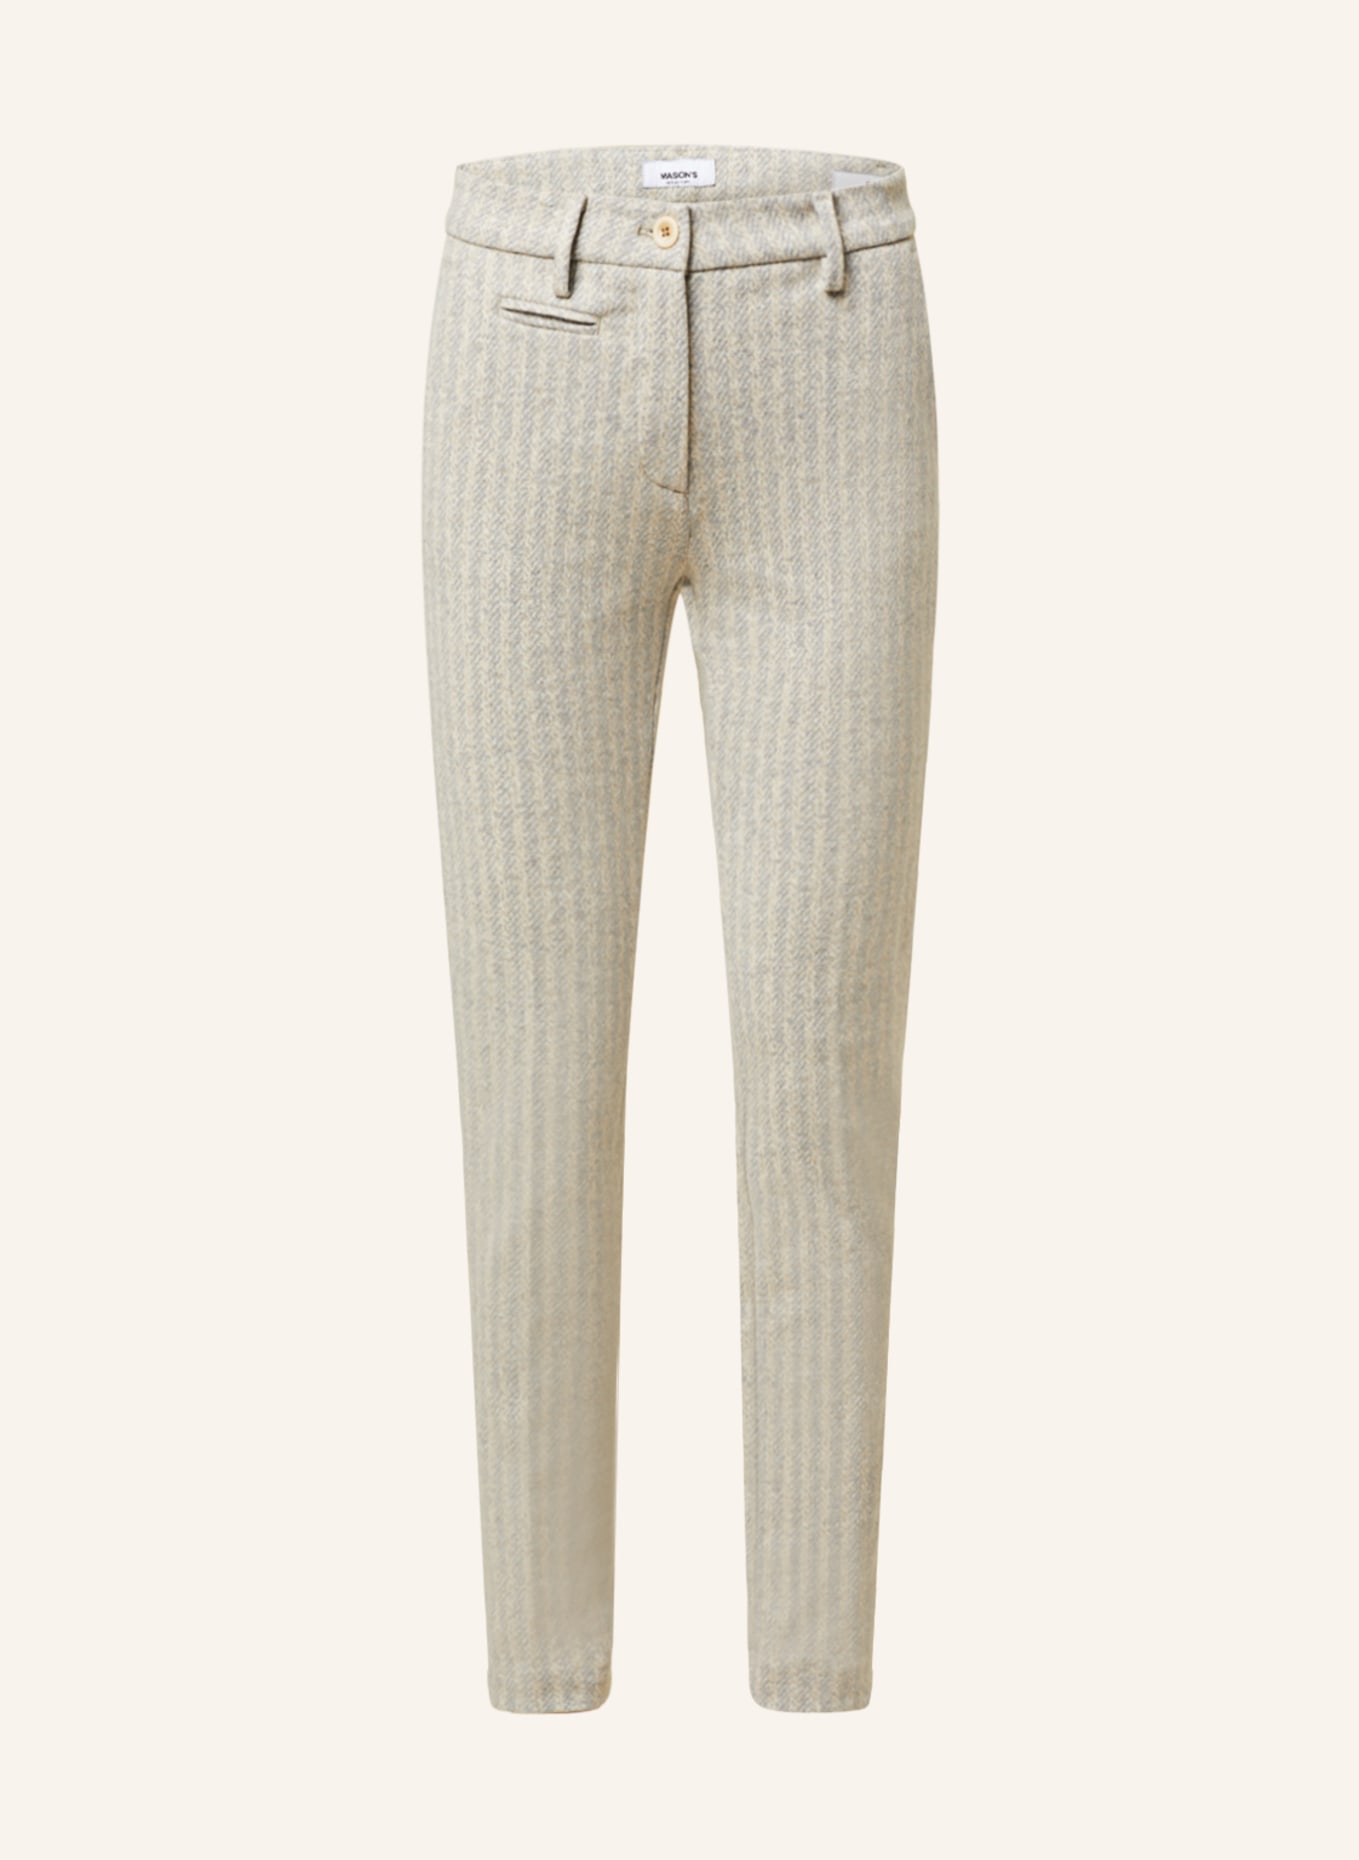 MASON'S Jersey pants, Color: LIGHT GRAY/ GRAY (Image 1)